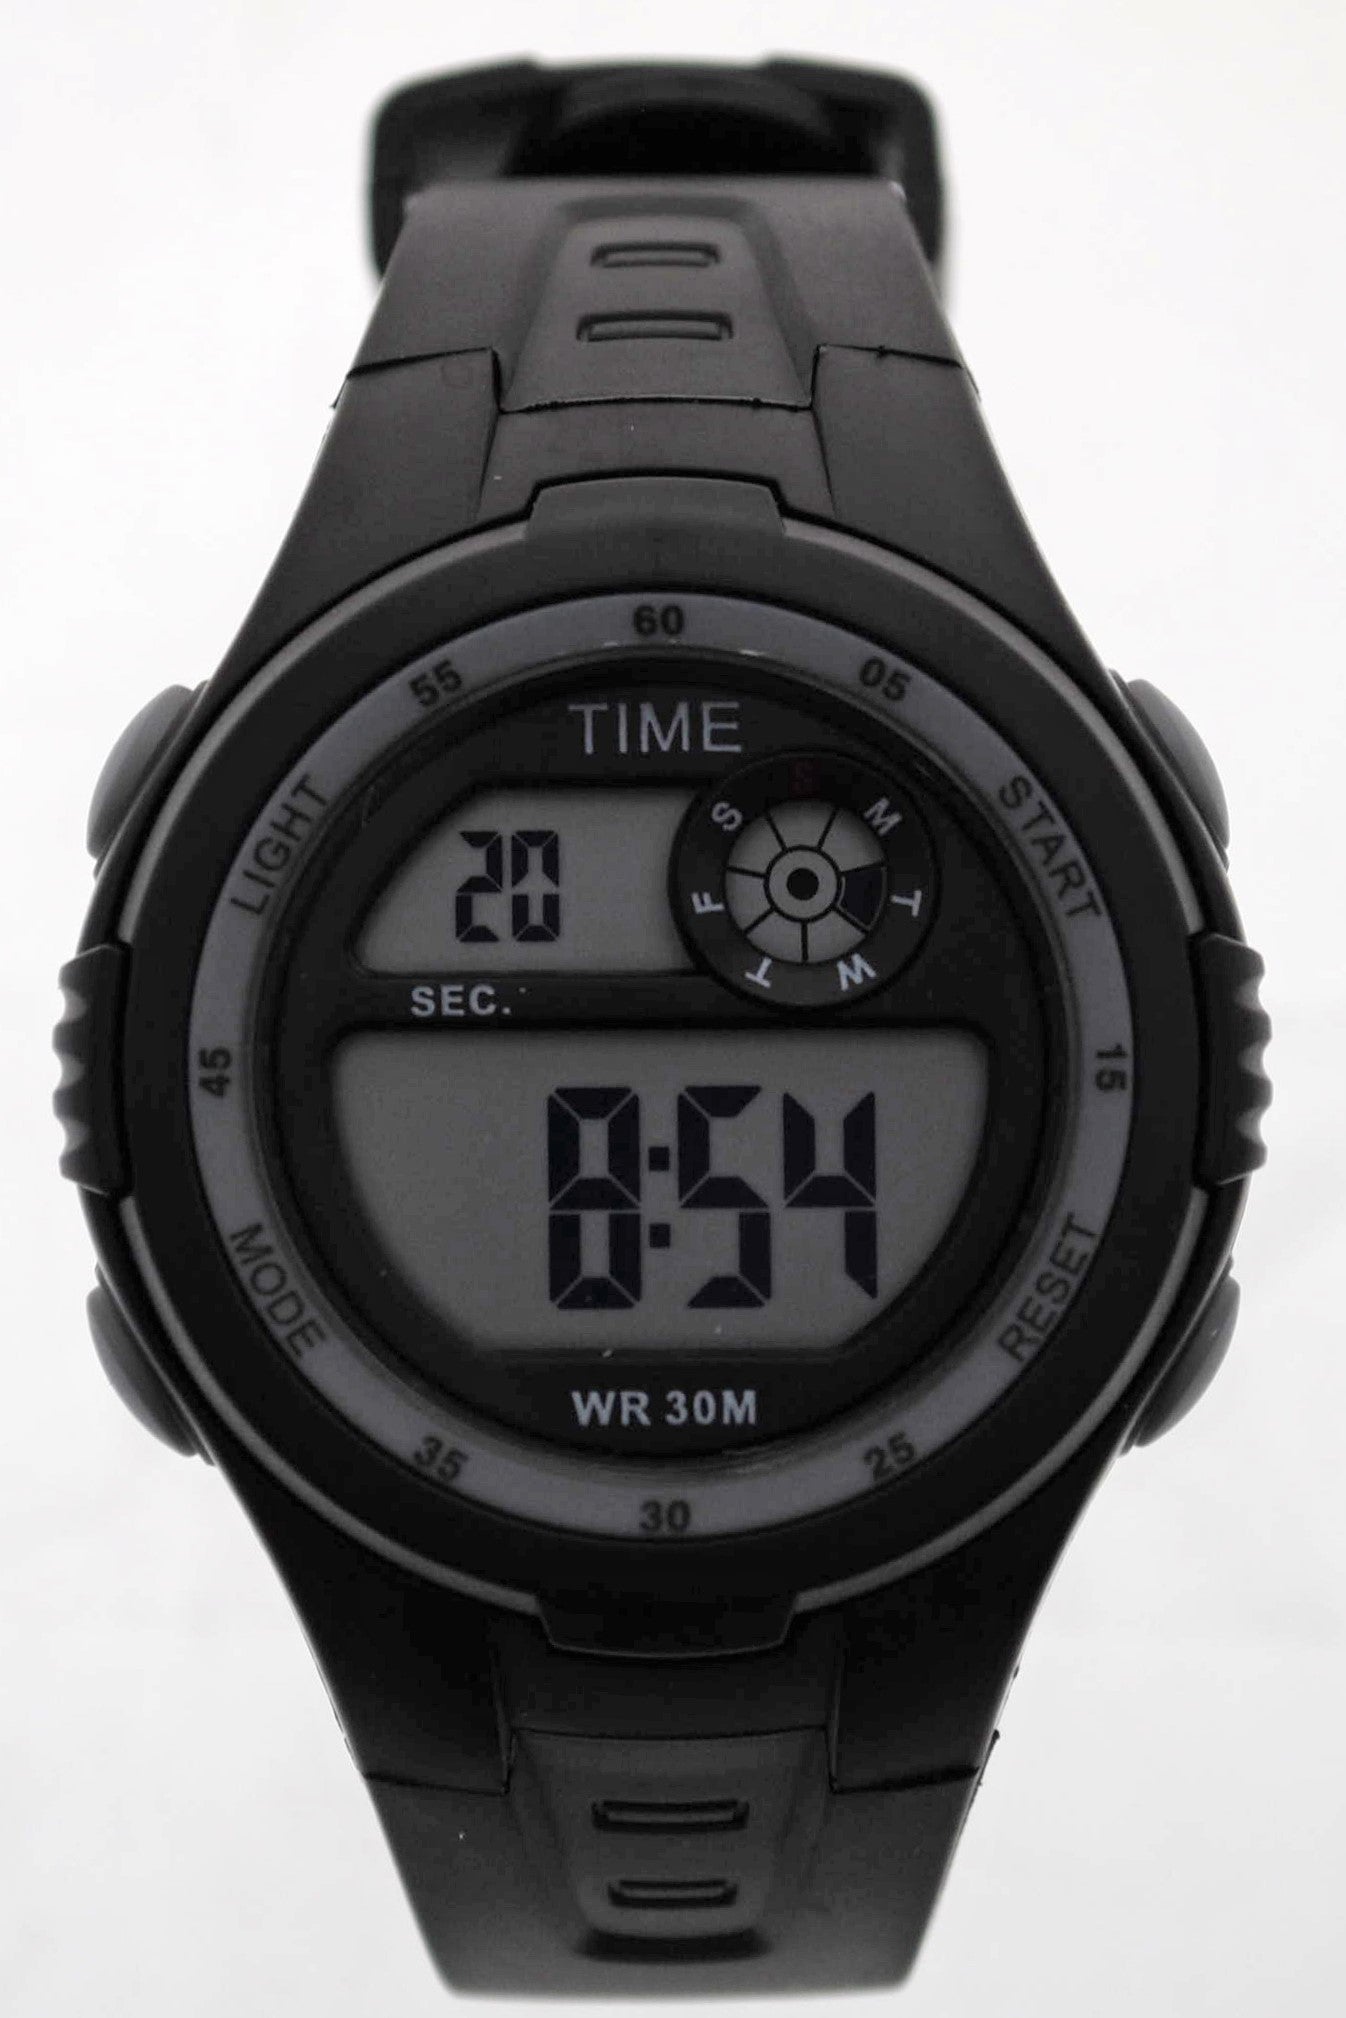 art. 1190 043NG - TIME - Reloj Digital Crono Alarma, Dama, Sumergible 3 ATM